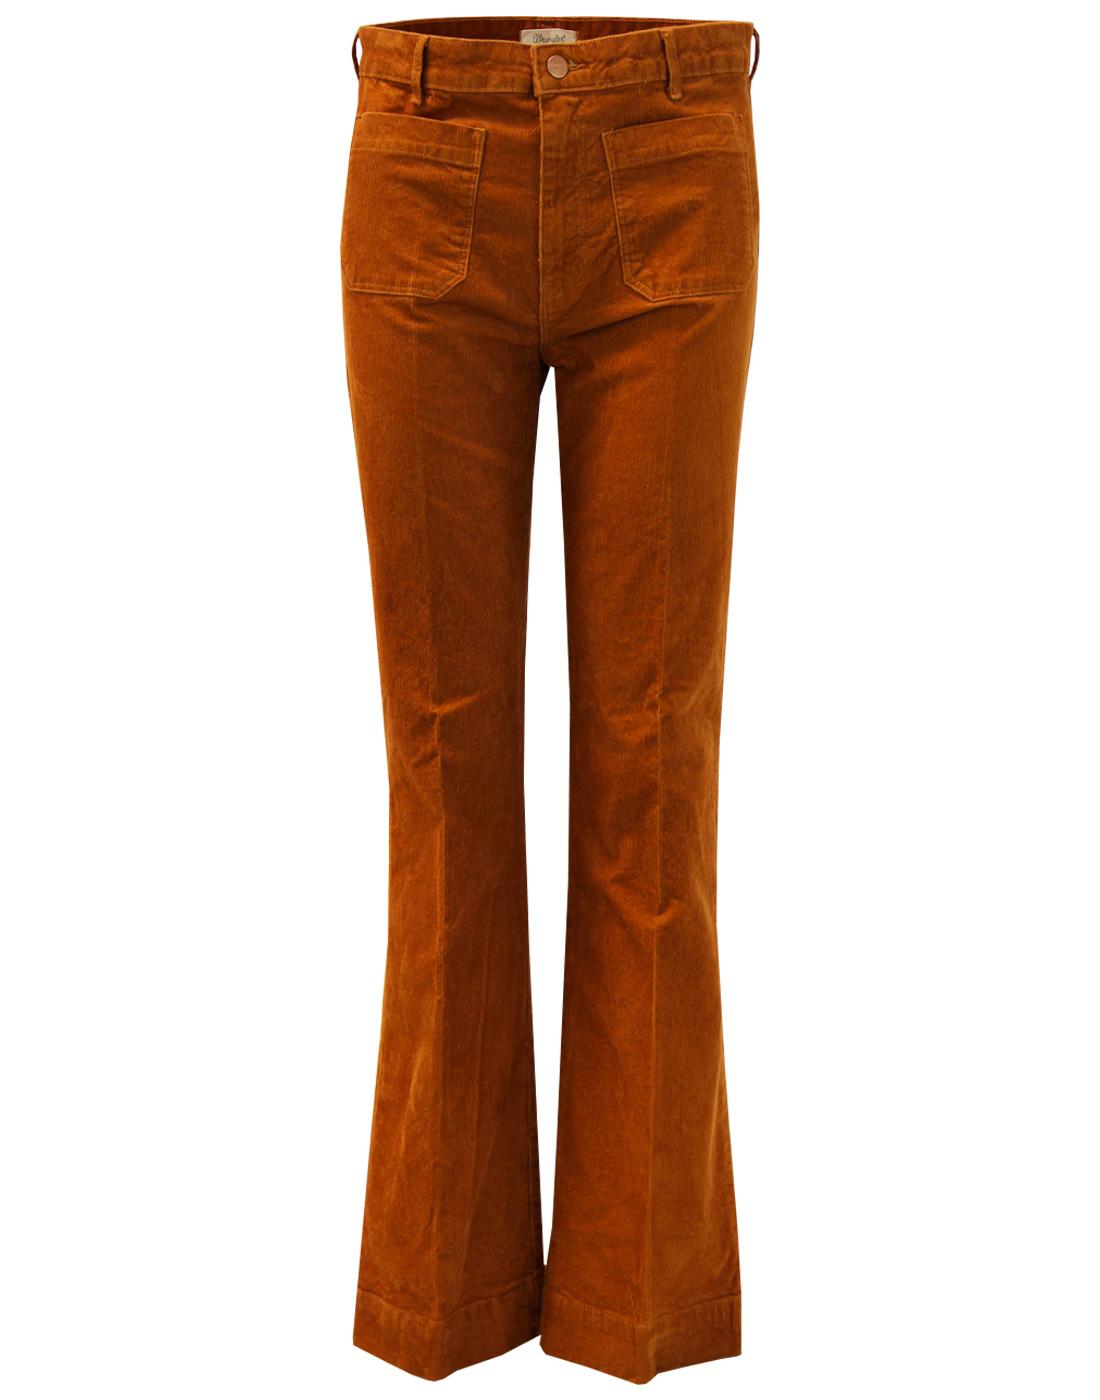 WRANGLER Retro 70s Vintage Stretch Cord Flared Trousers Copper